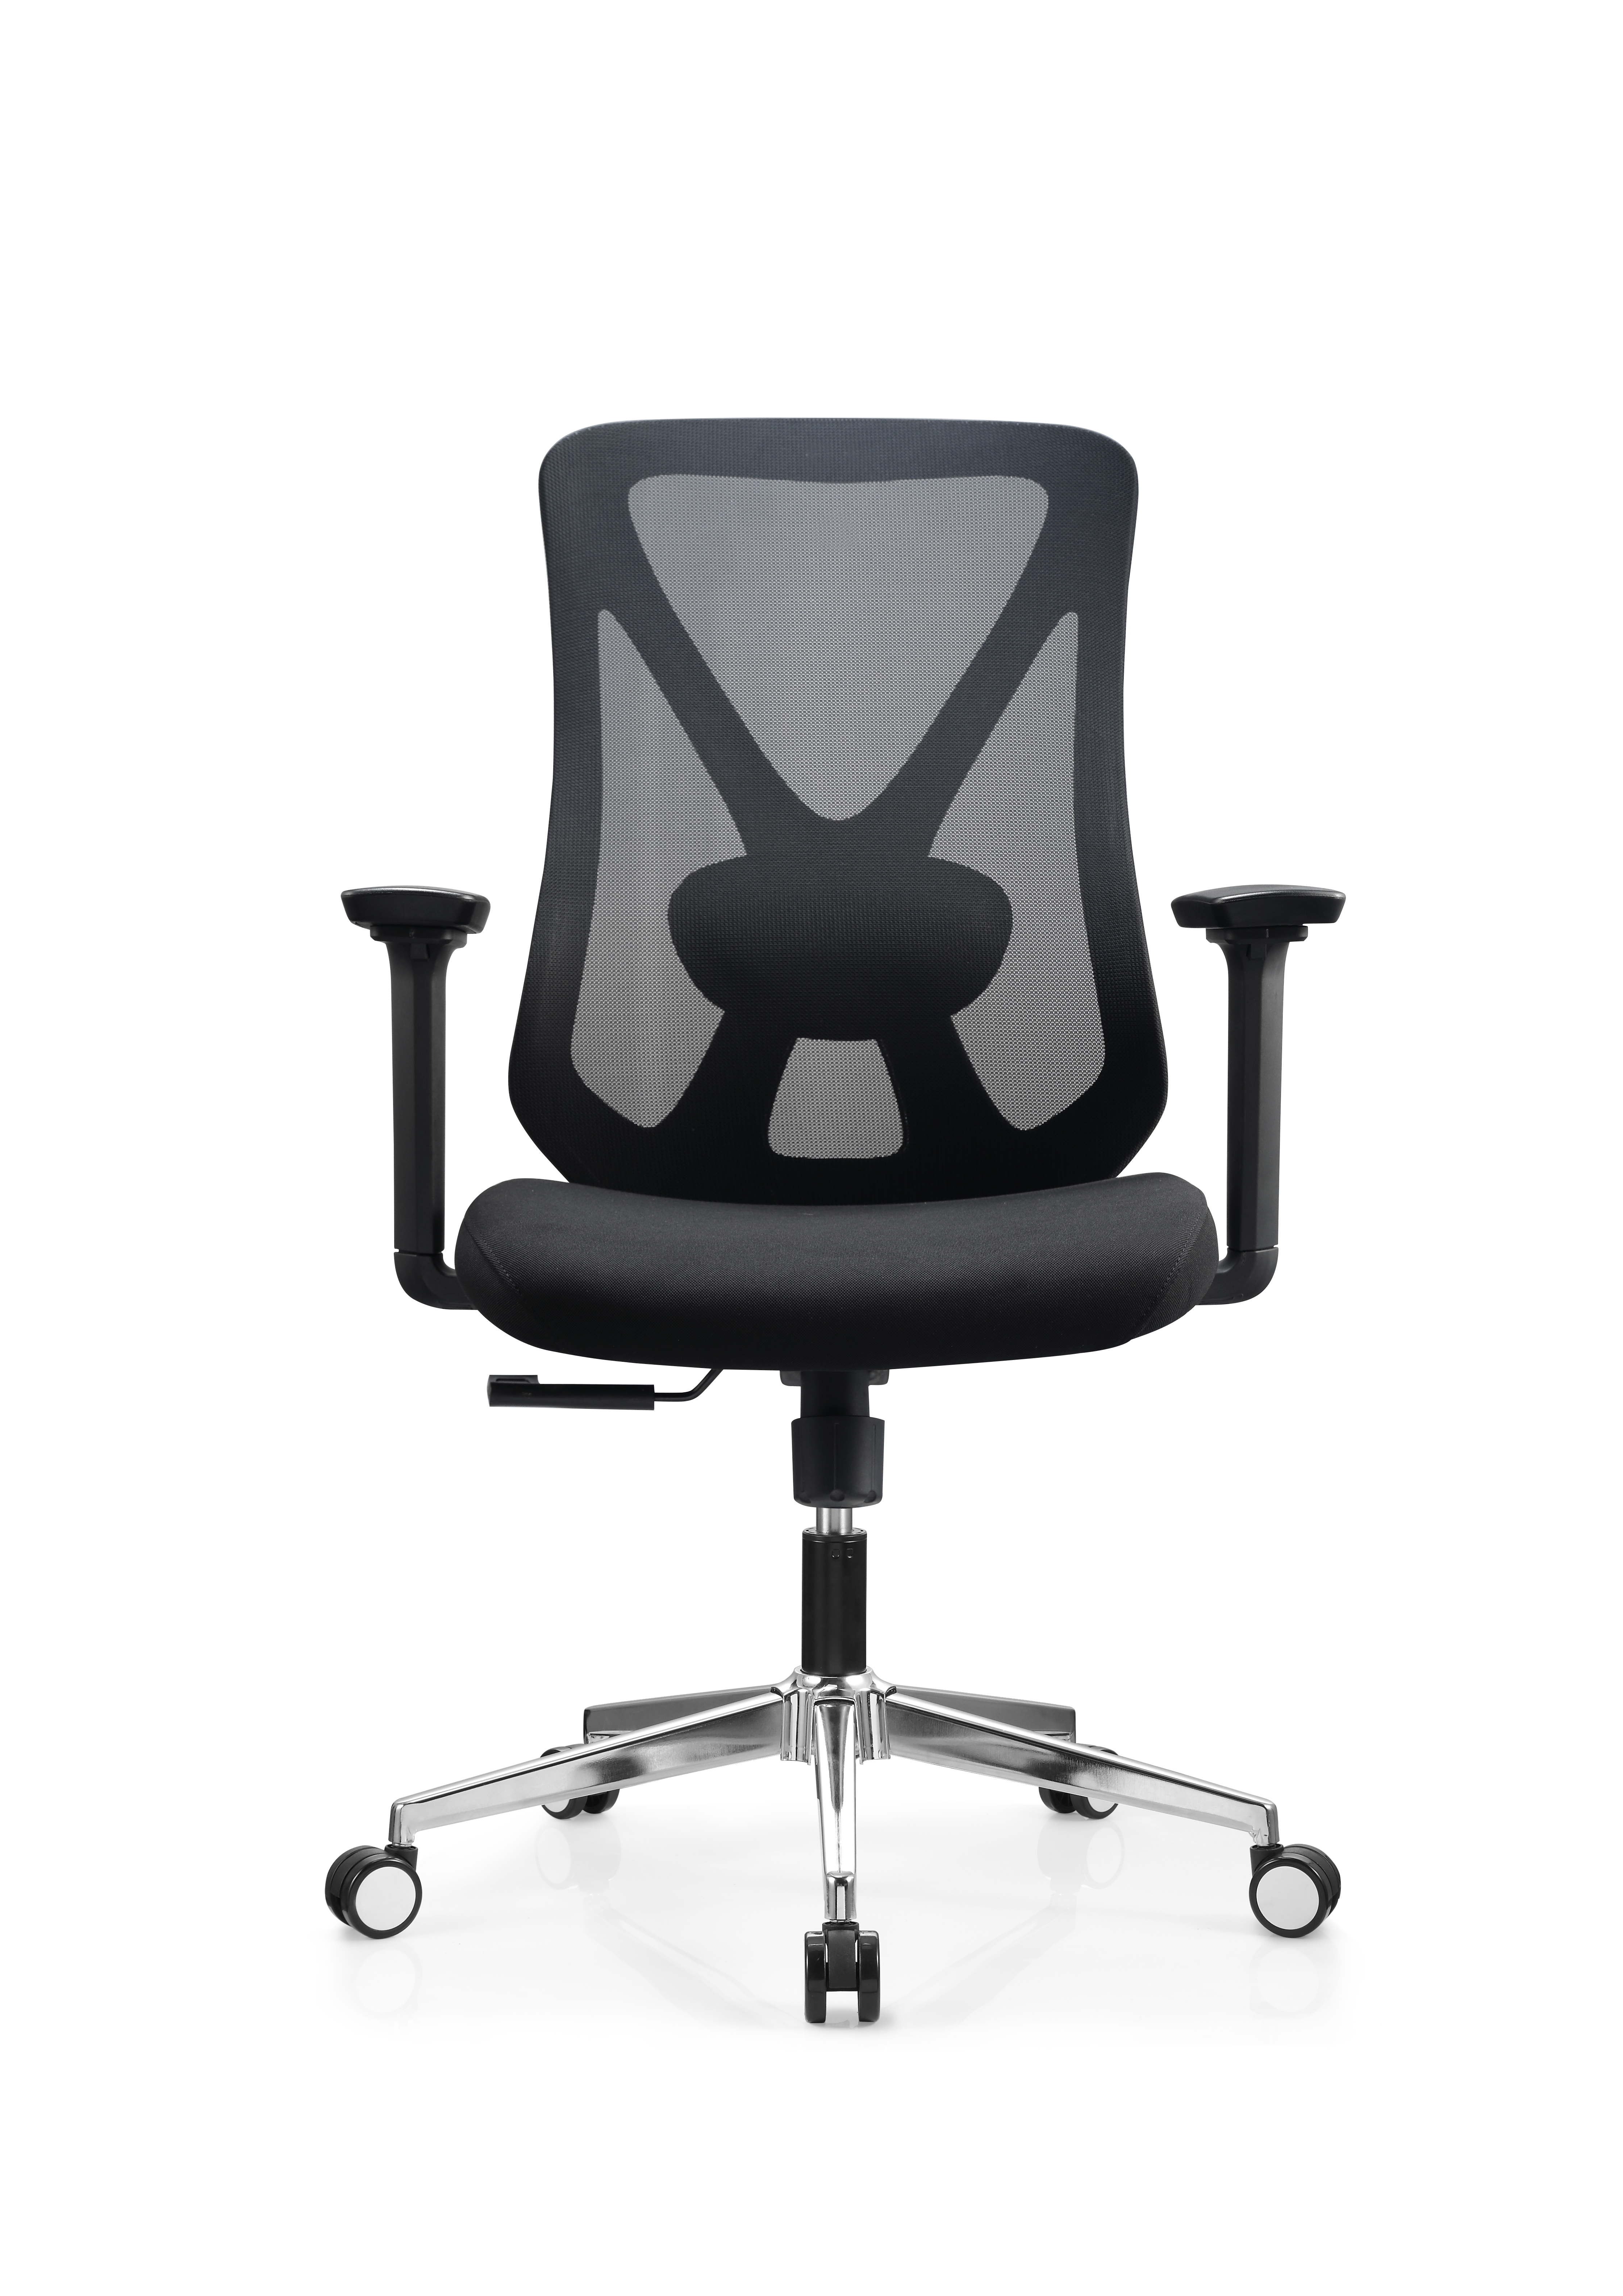 Newcity 629B הנמכר ביותר ריהוט משרדי כיסא רשת מנהלים עם משענת נוחה ומתכוונן לגובה עיצוב מודרני כיסא רשת מחשב ספק פושאן סין